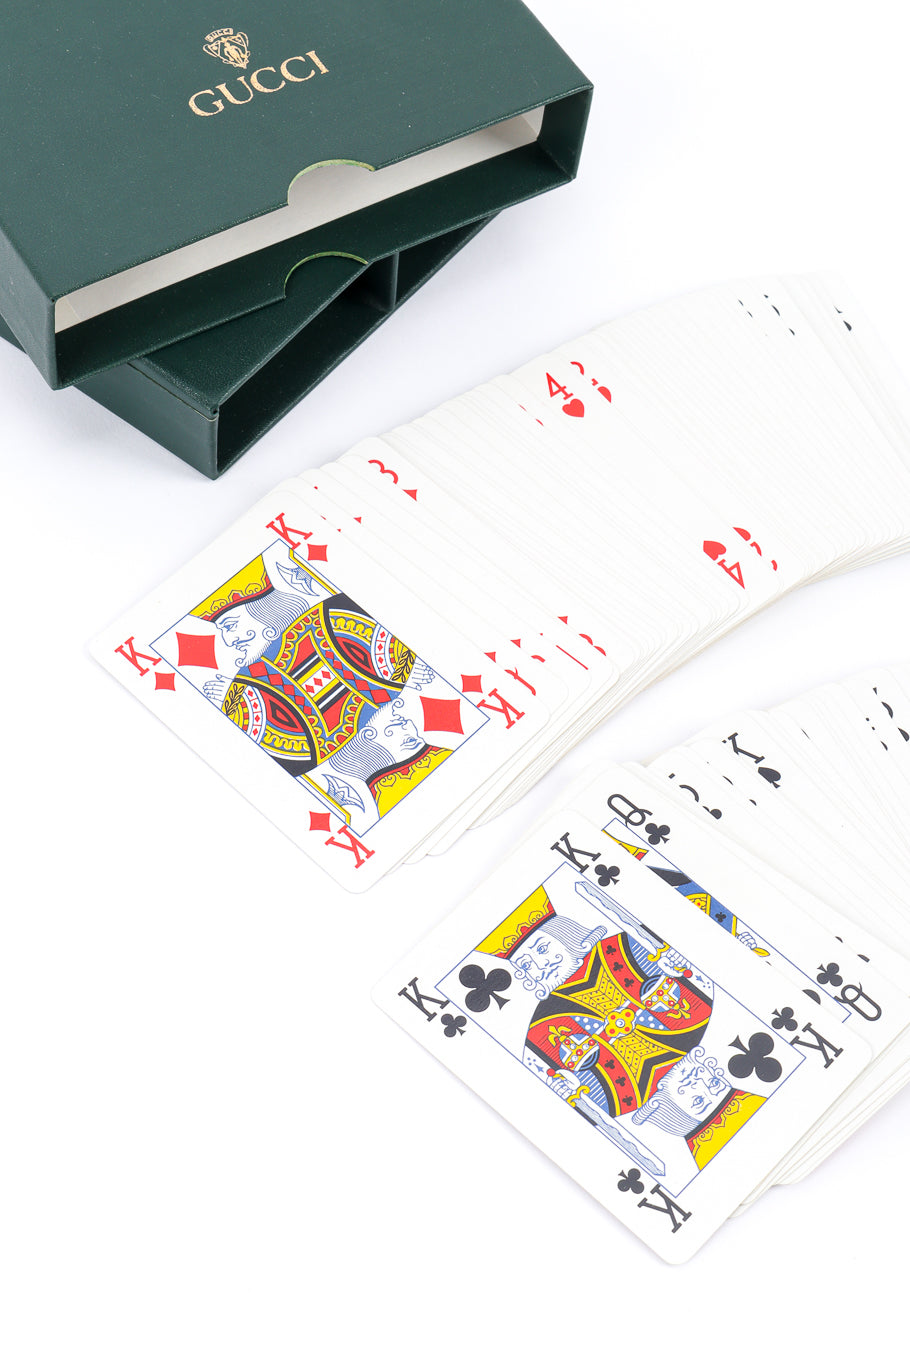 Vintage Gucci Red & Green 2 Deck Playing Card Set II decks closeup @recessla